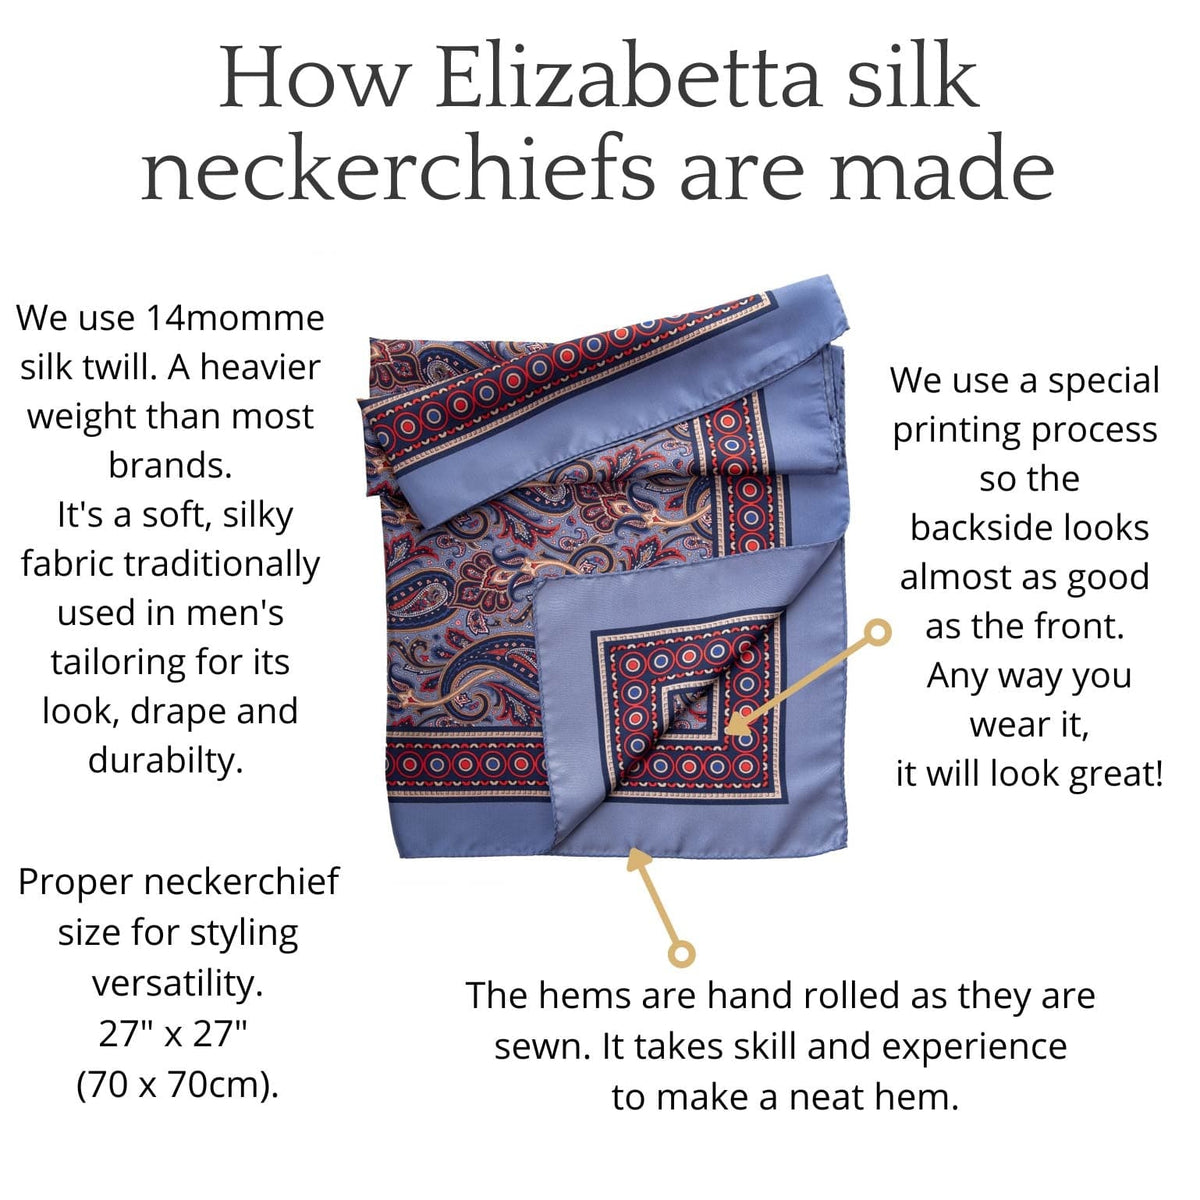 how Elizabetta neckerchiefs are made